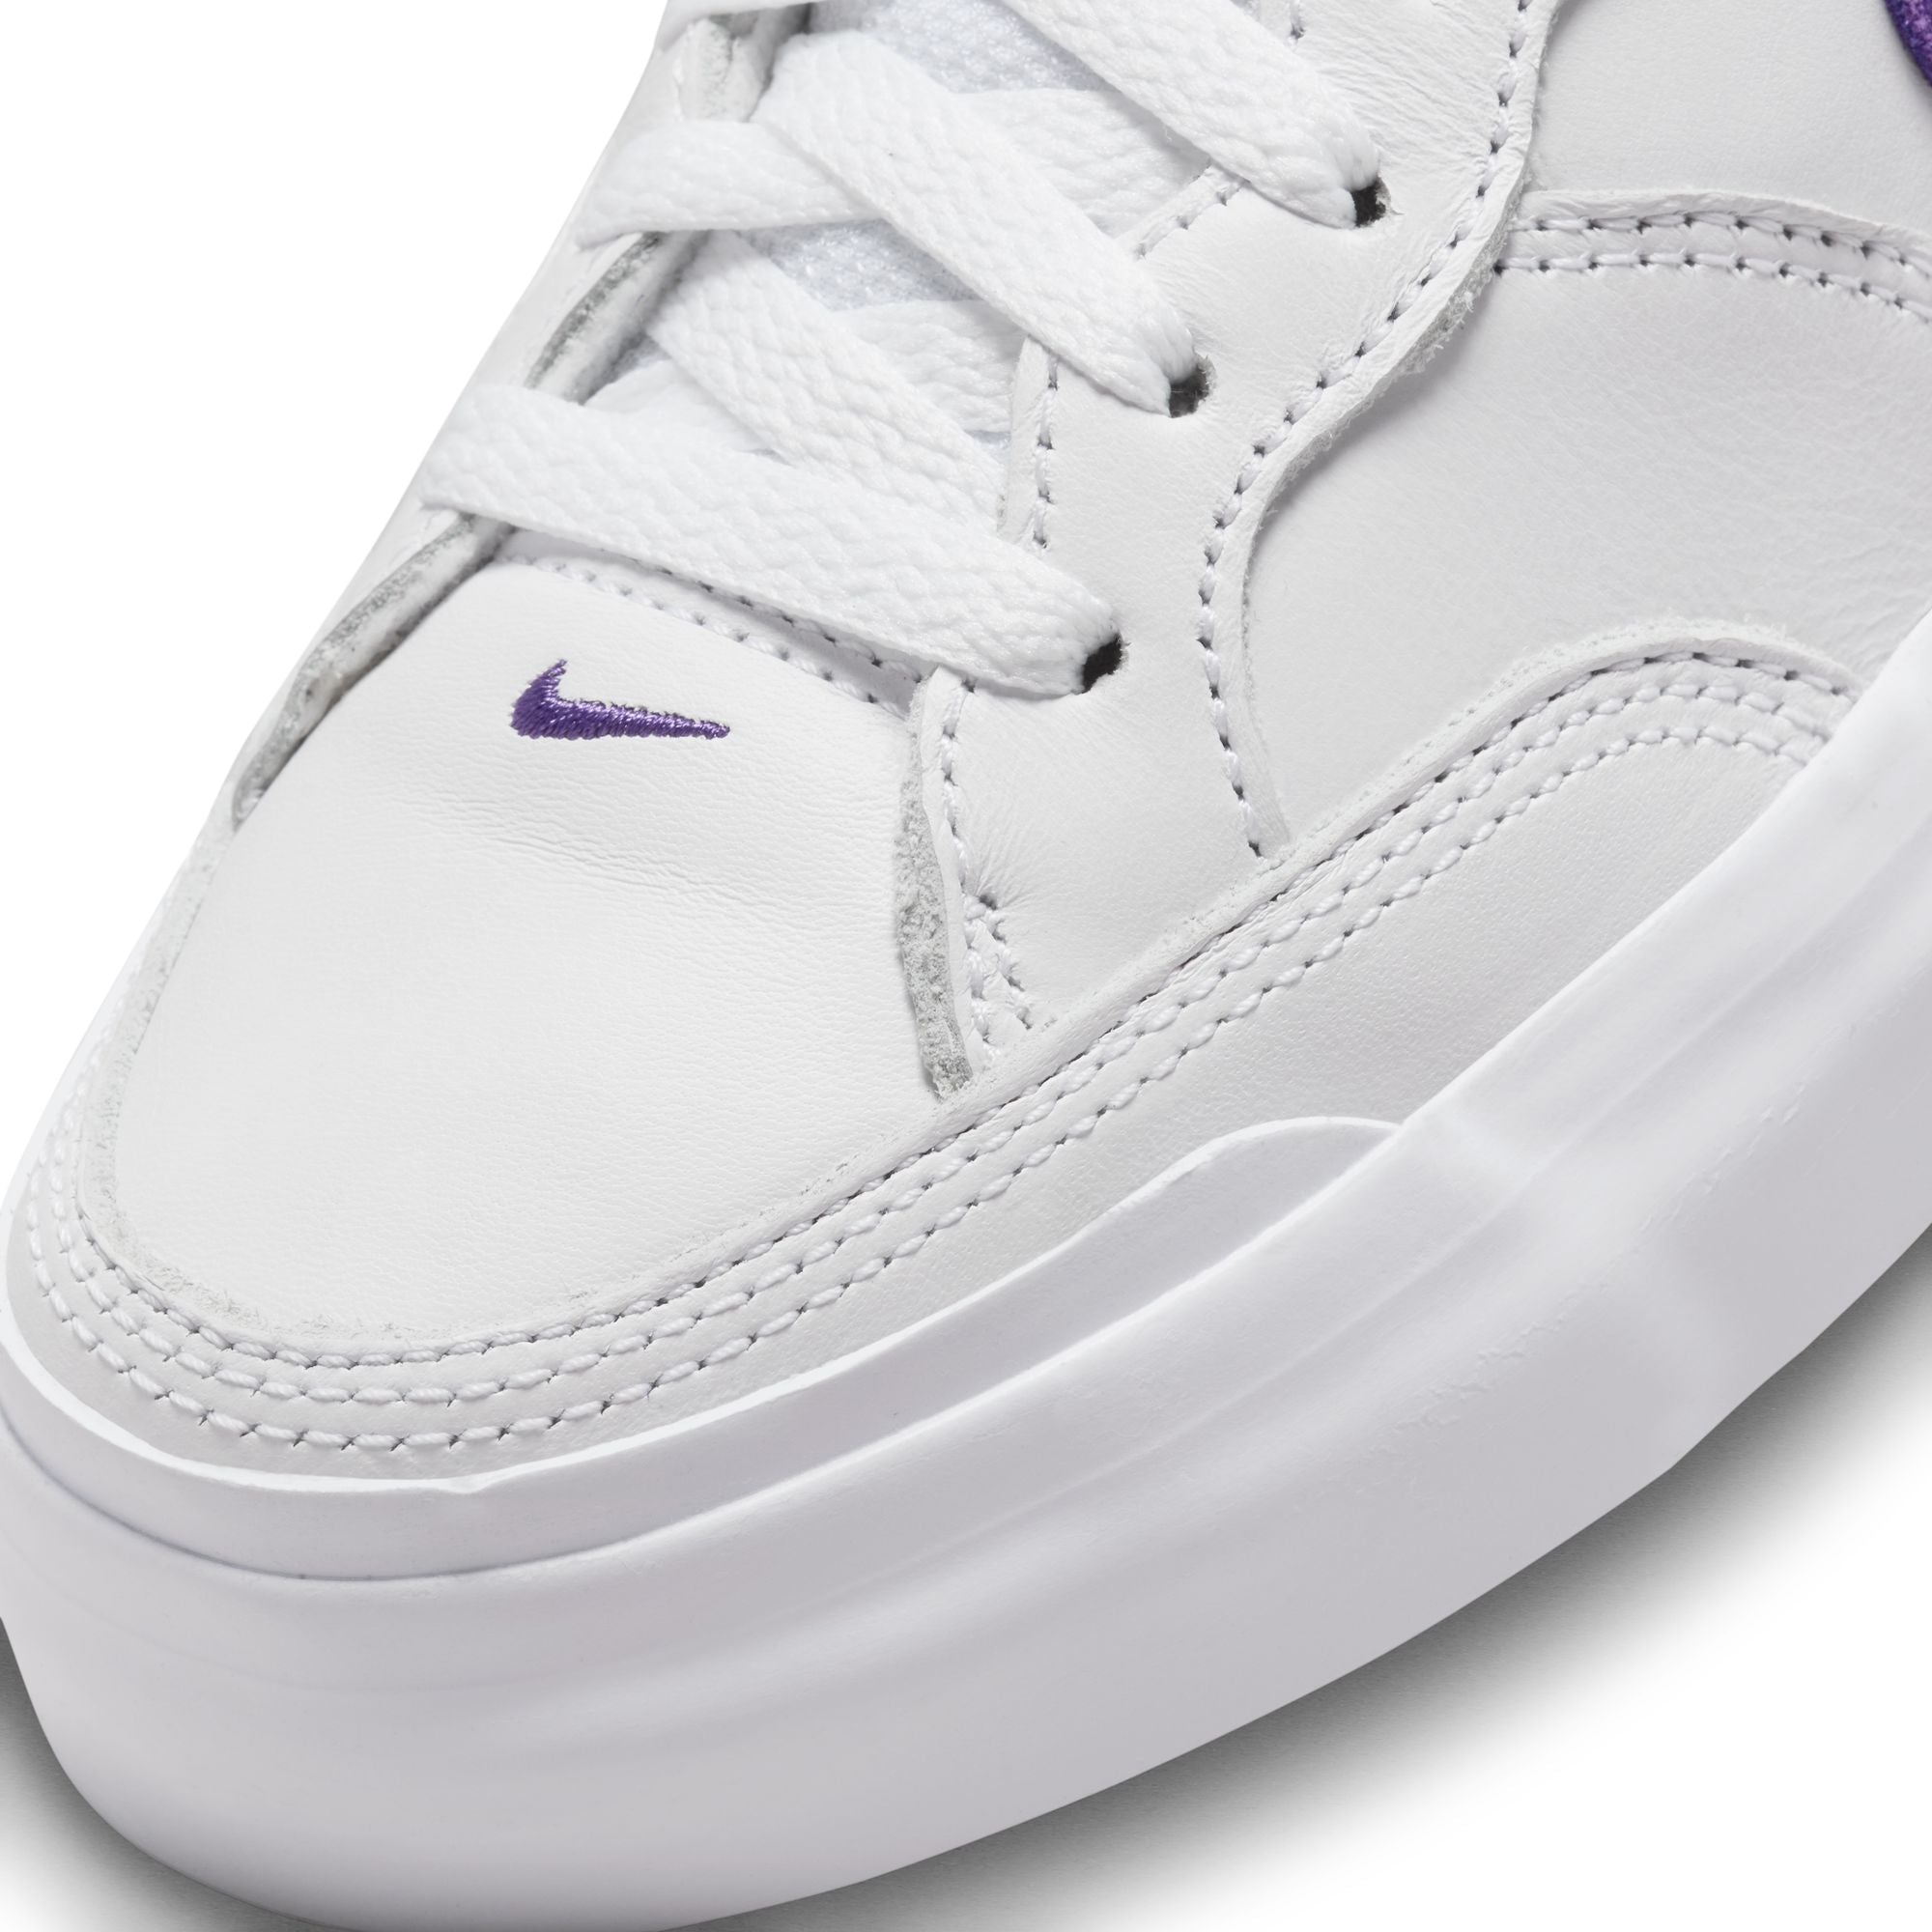 Nike SB ISO Pogo Plus Shoes - Court Purple/White-Light Gum